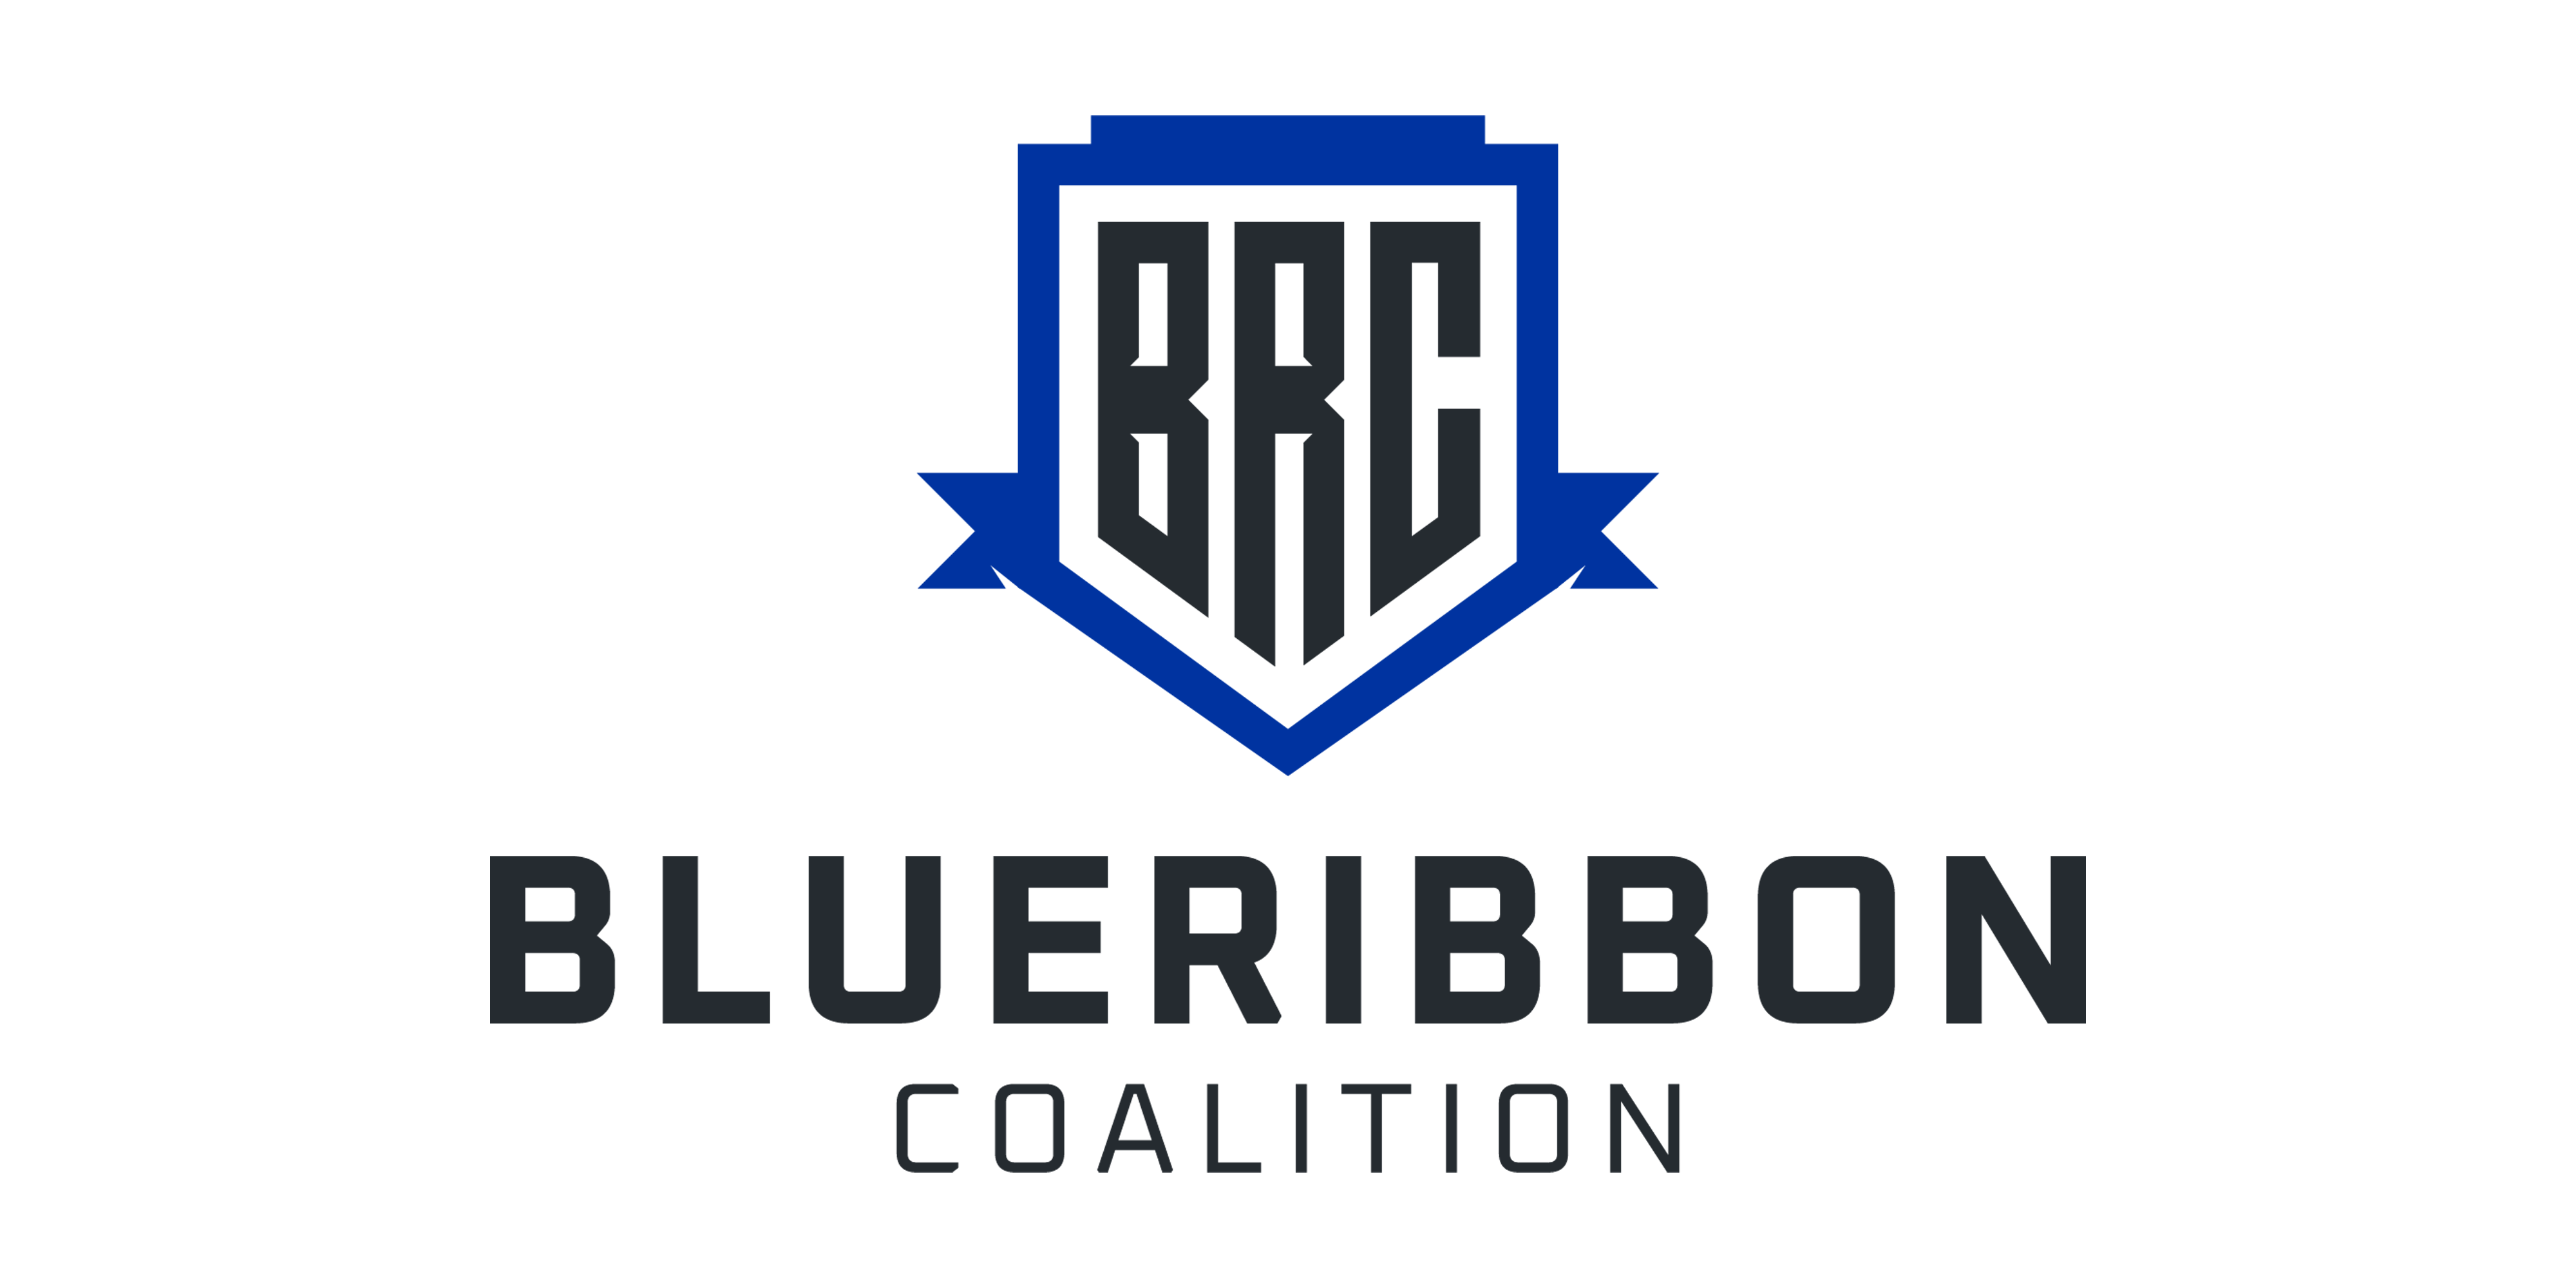 BlueRibbon Coalition/ShareTrails